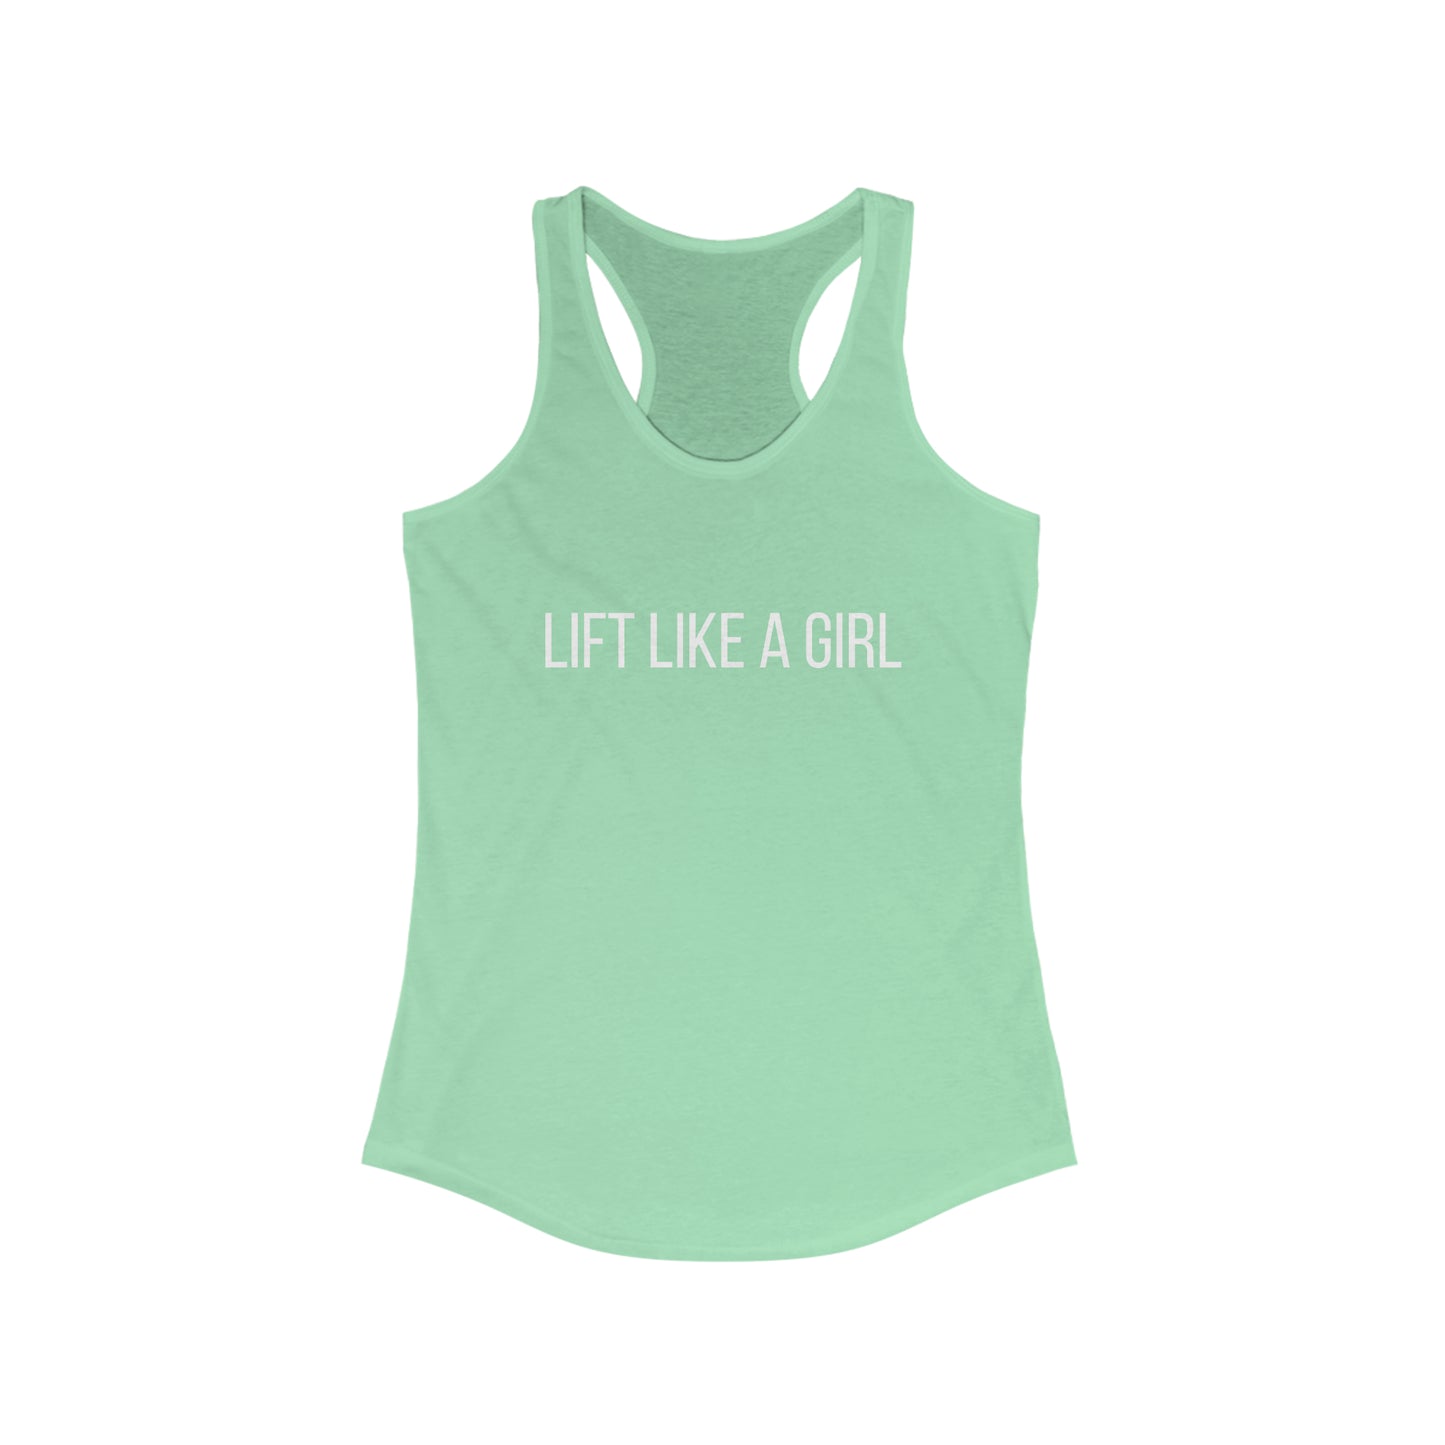 "Lift Like a Girl" Gym Tank